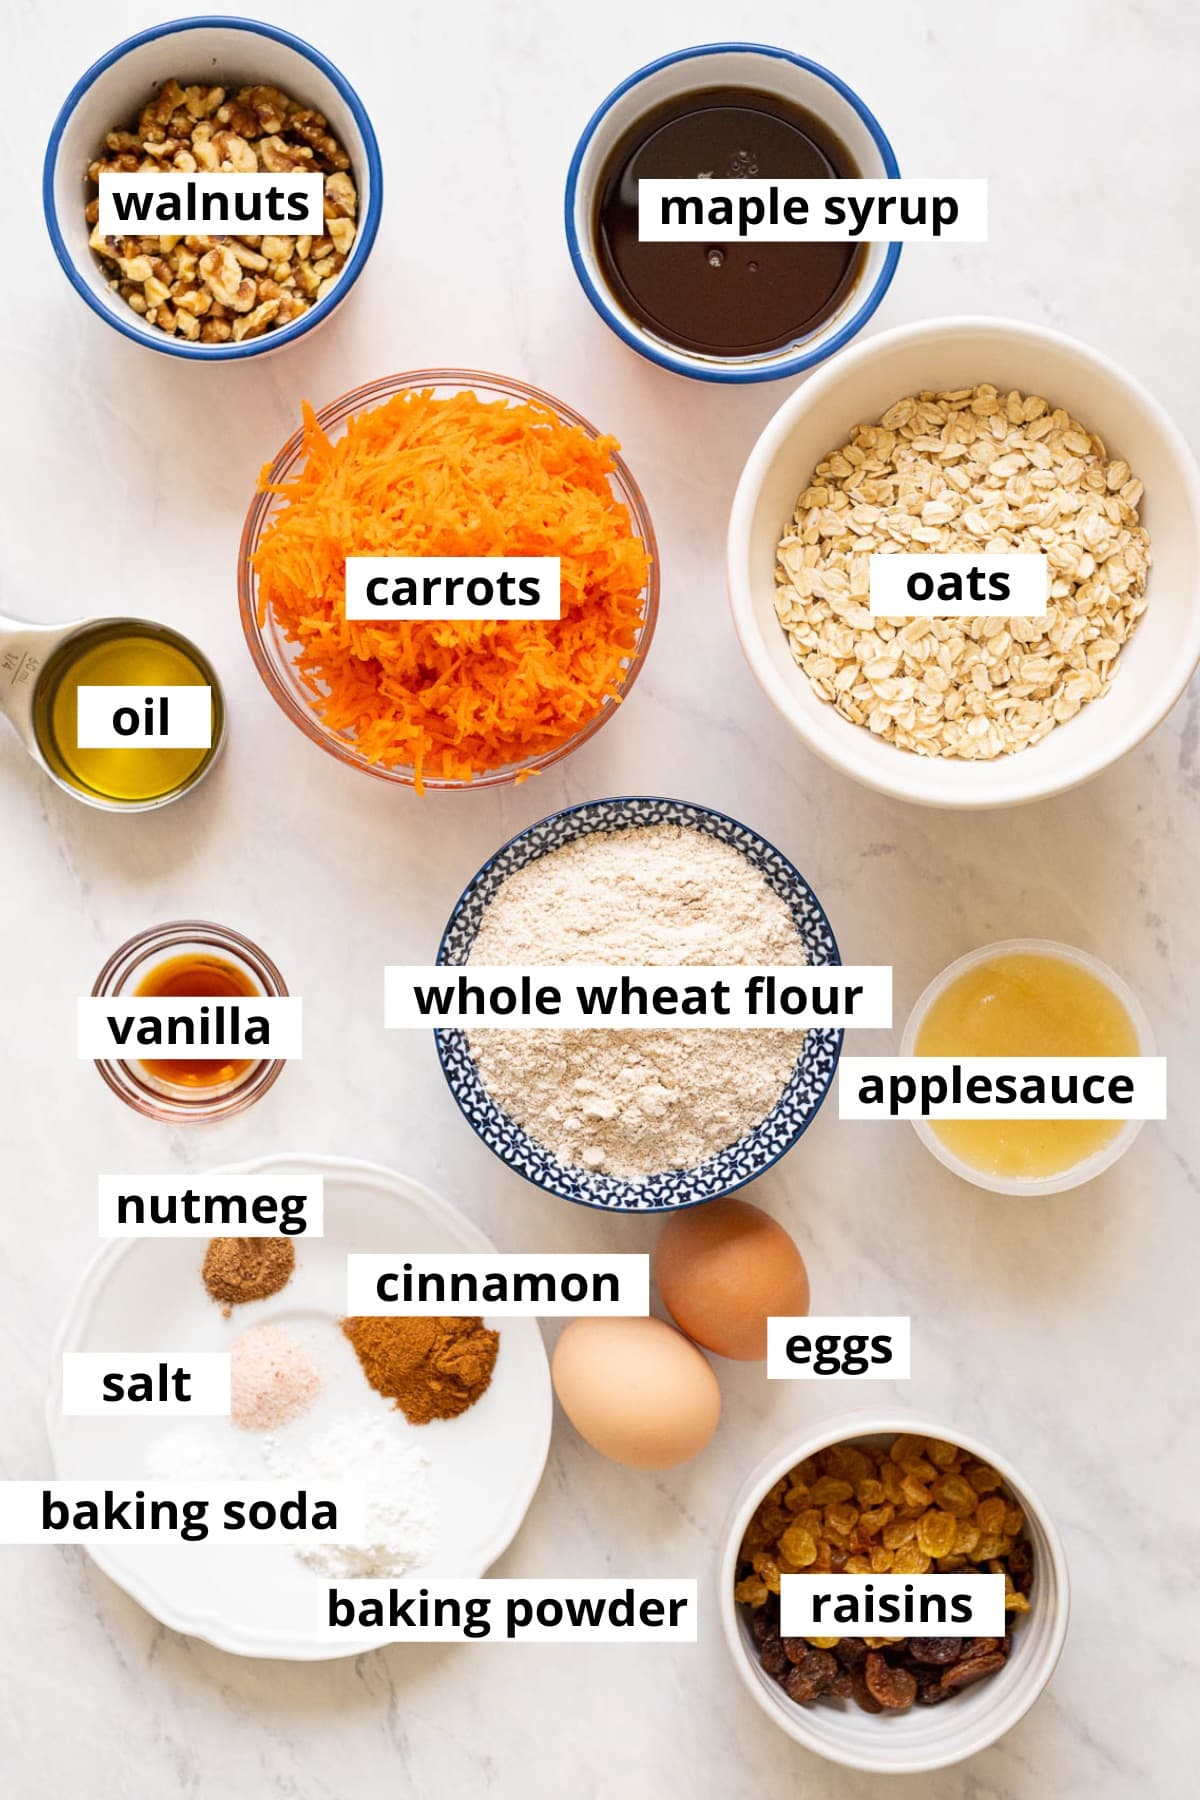 Walnuts, carrots, maple syrup, oats, oil, vanilla, flour, applesauce, eggs, raisins, cinnamon, nutmeg, baking powder, baking soda, salt.